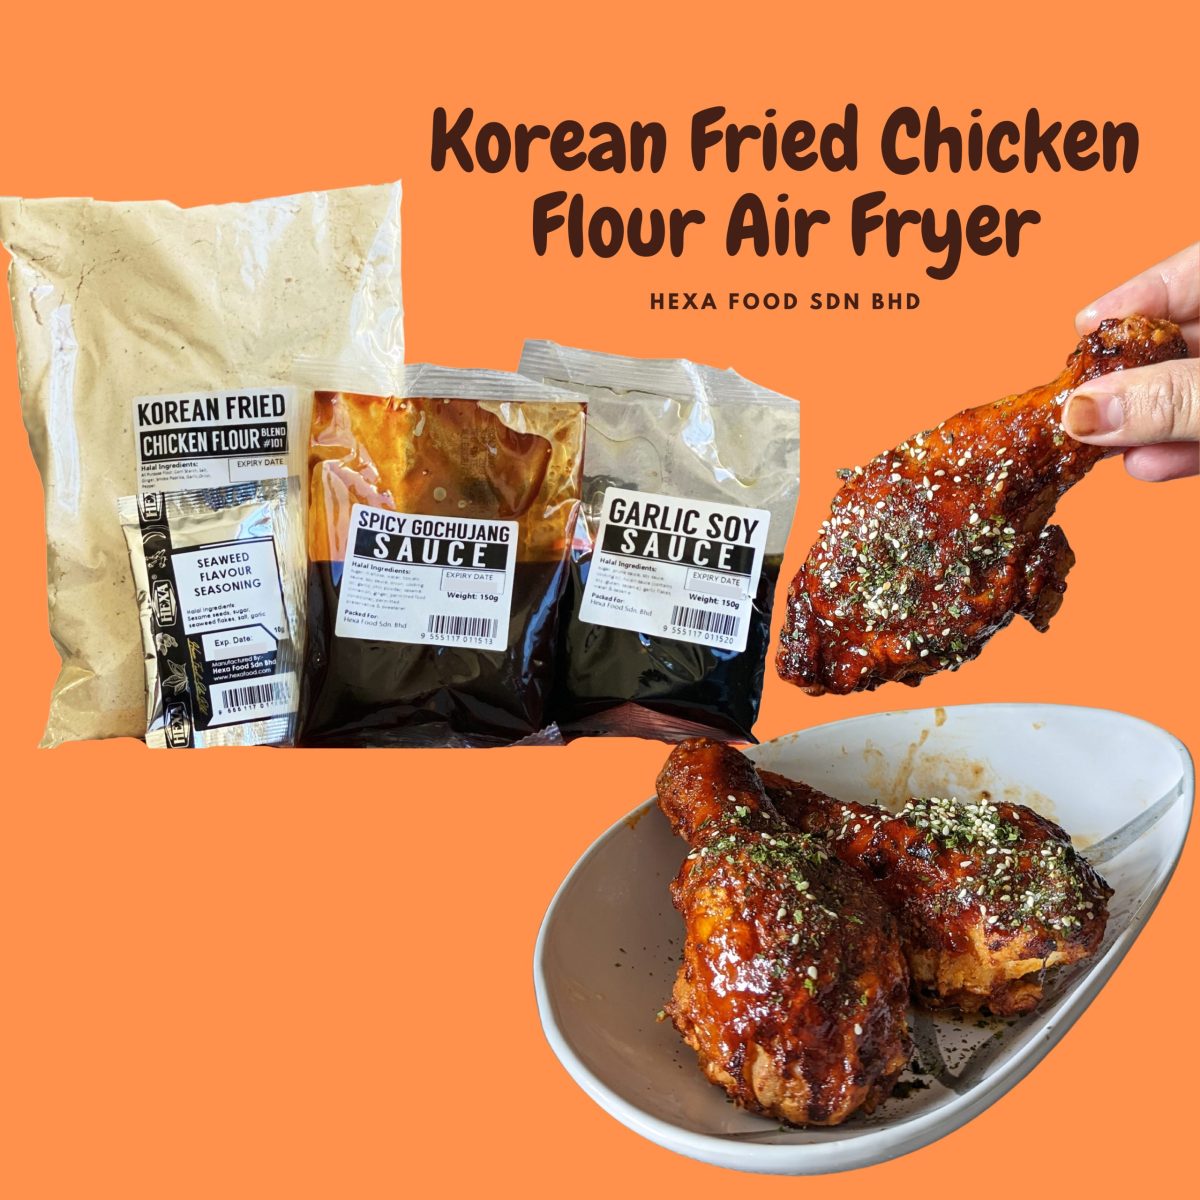 Korean Fried Chicken Flour Air Fryer